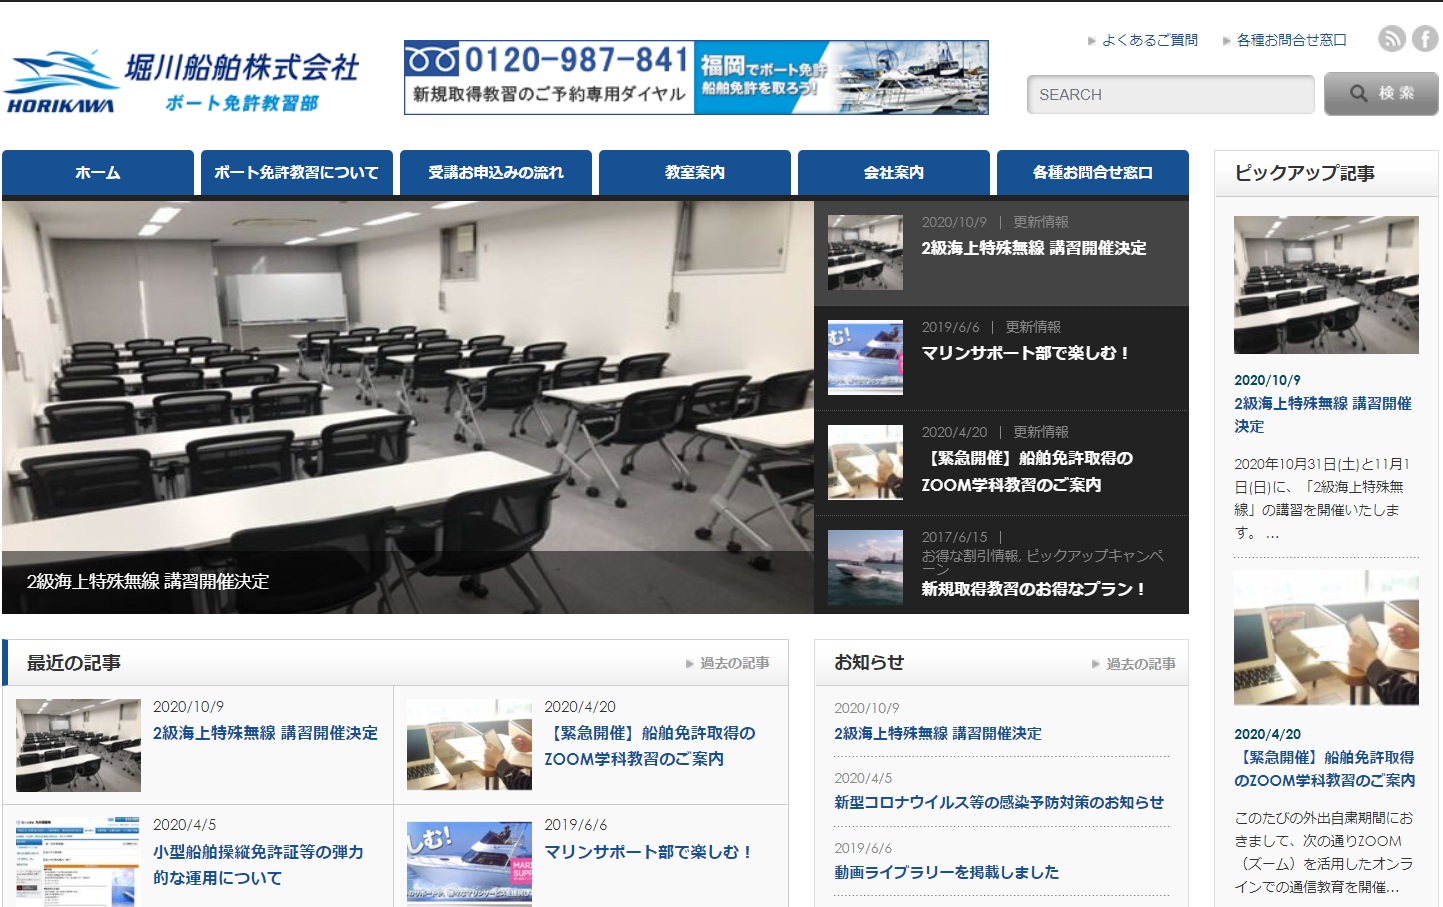 佐賀県 堀川船舶株式会社 ボート免許教習部で小型船舶免許を取得